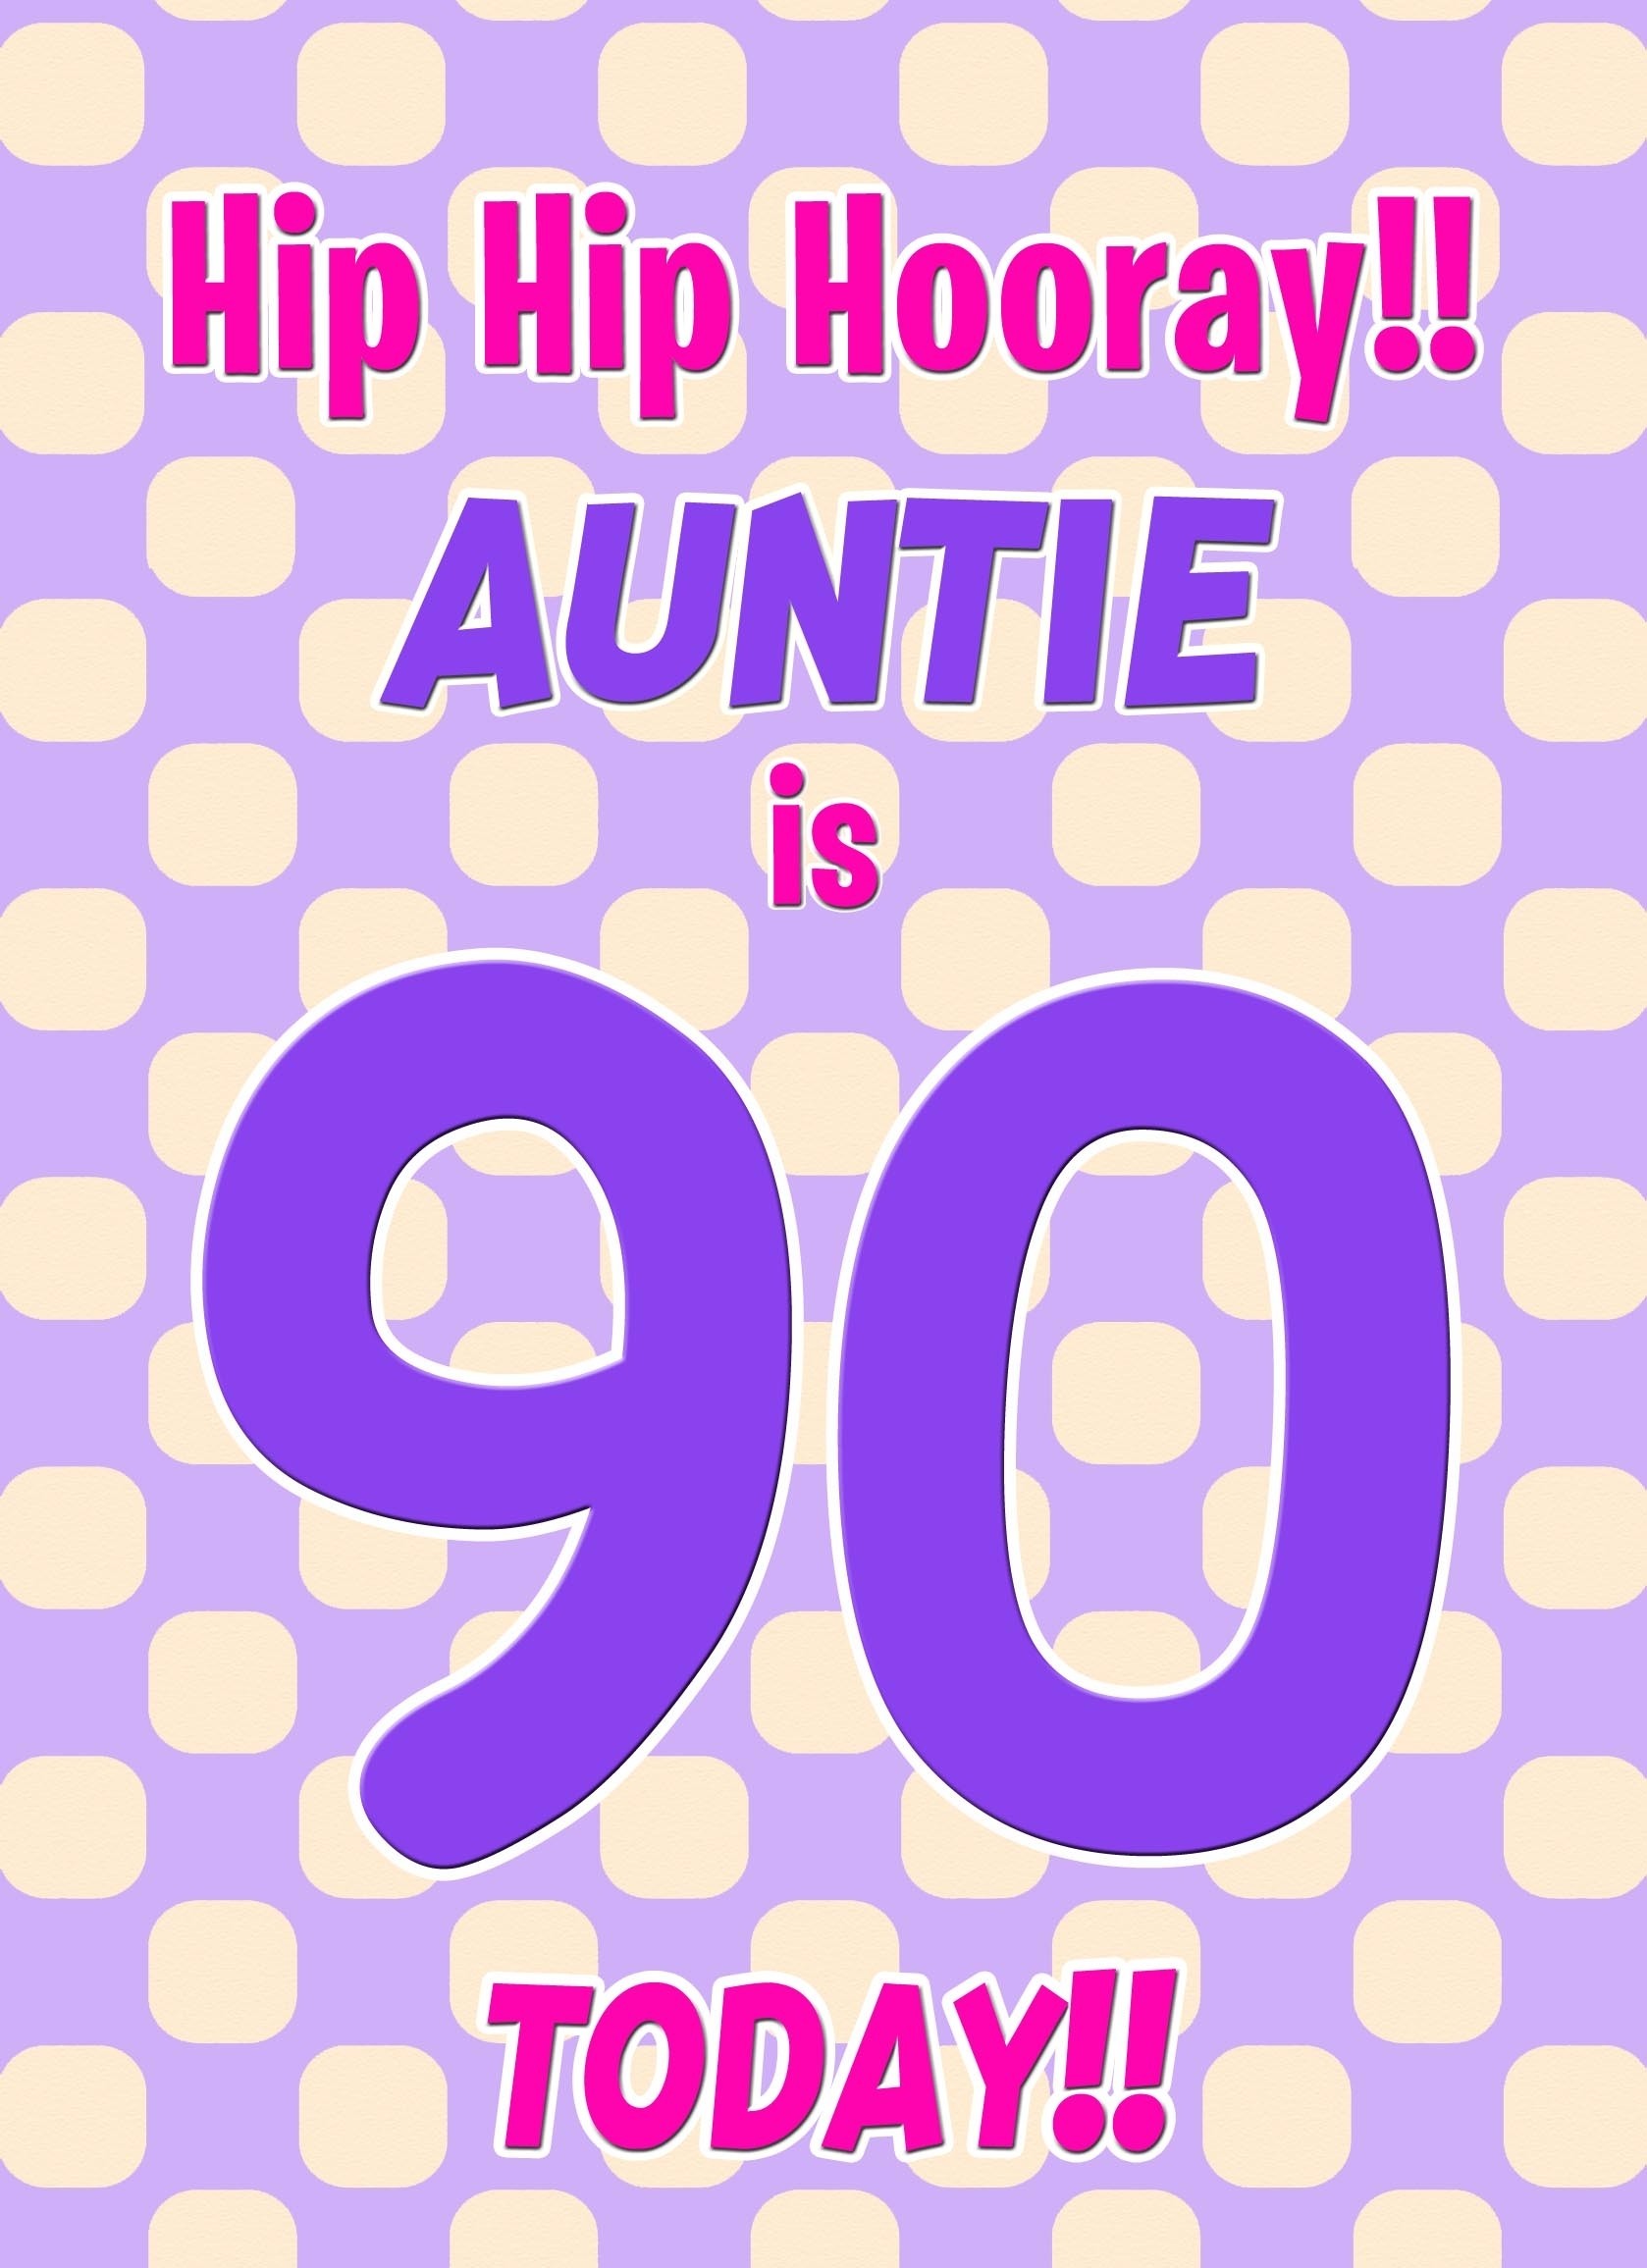 Auntie 90th Birthday Card (Purple Spots)